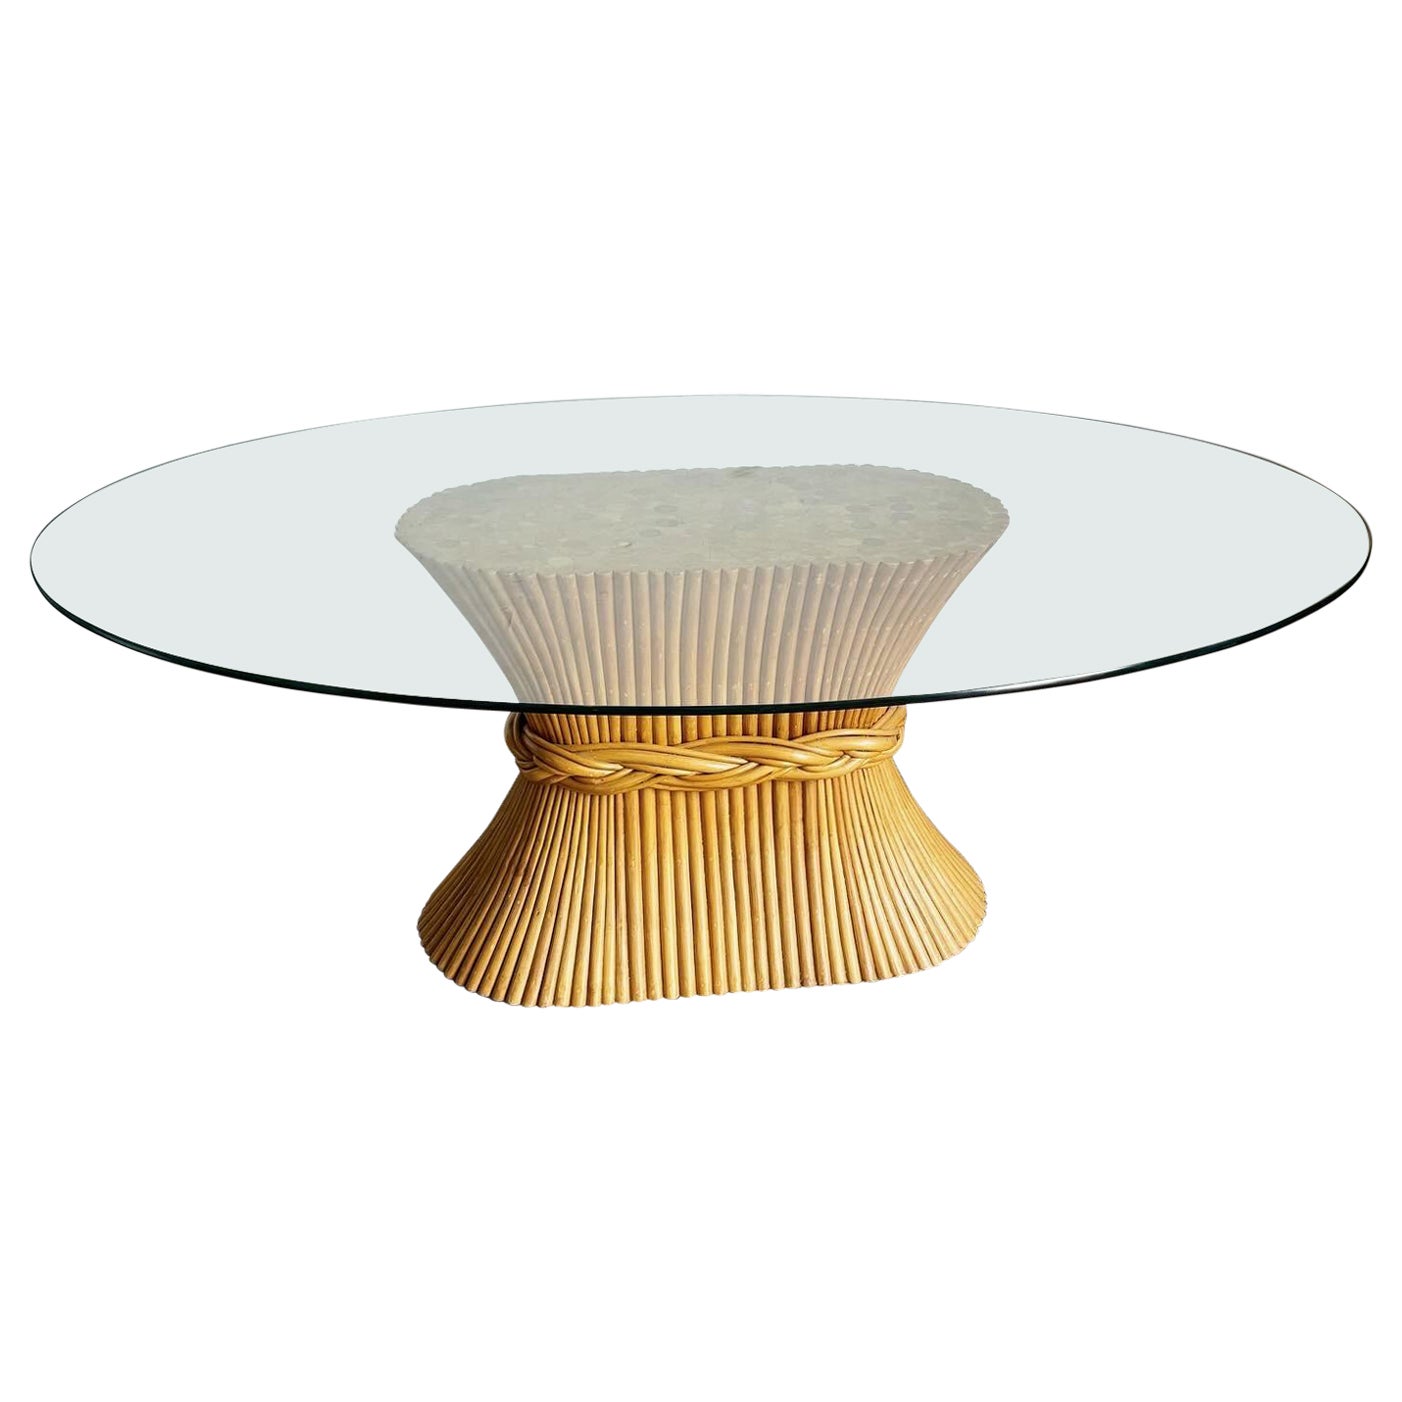 Boho Chic McGuire Style ‚ÄúSheaf of Wheat‚Äù Rattan Oval Glass Top Dining Table